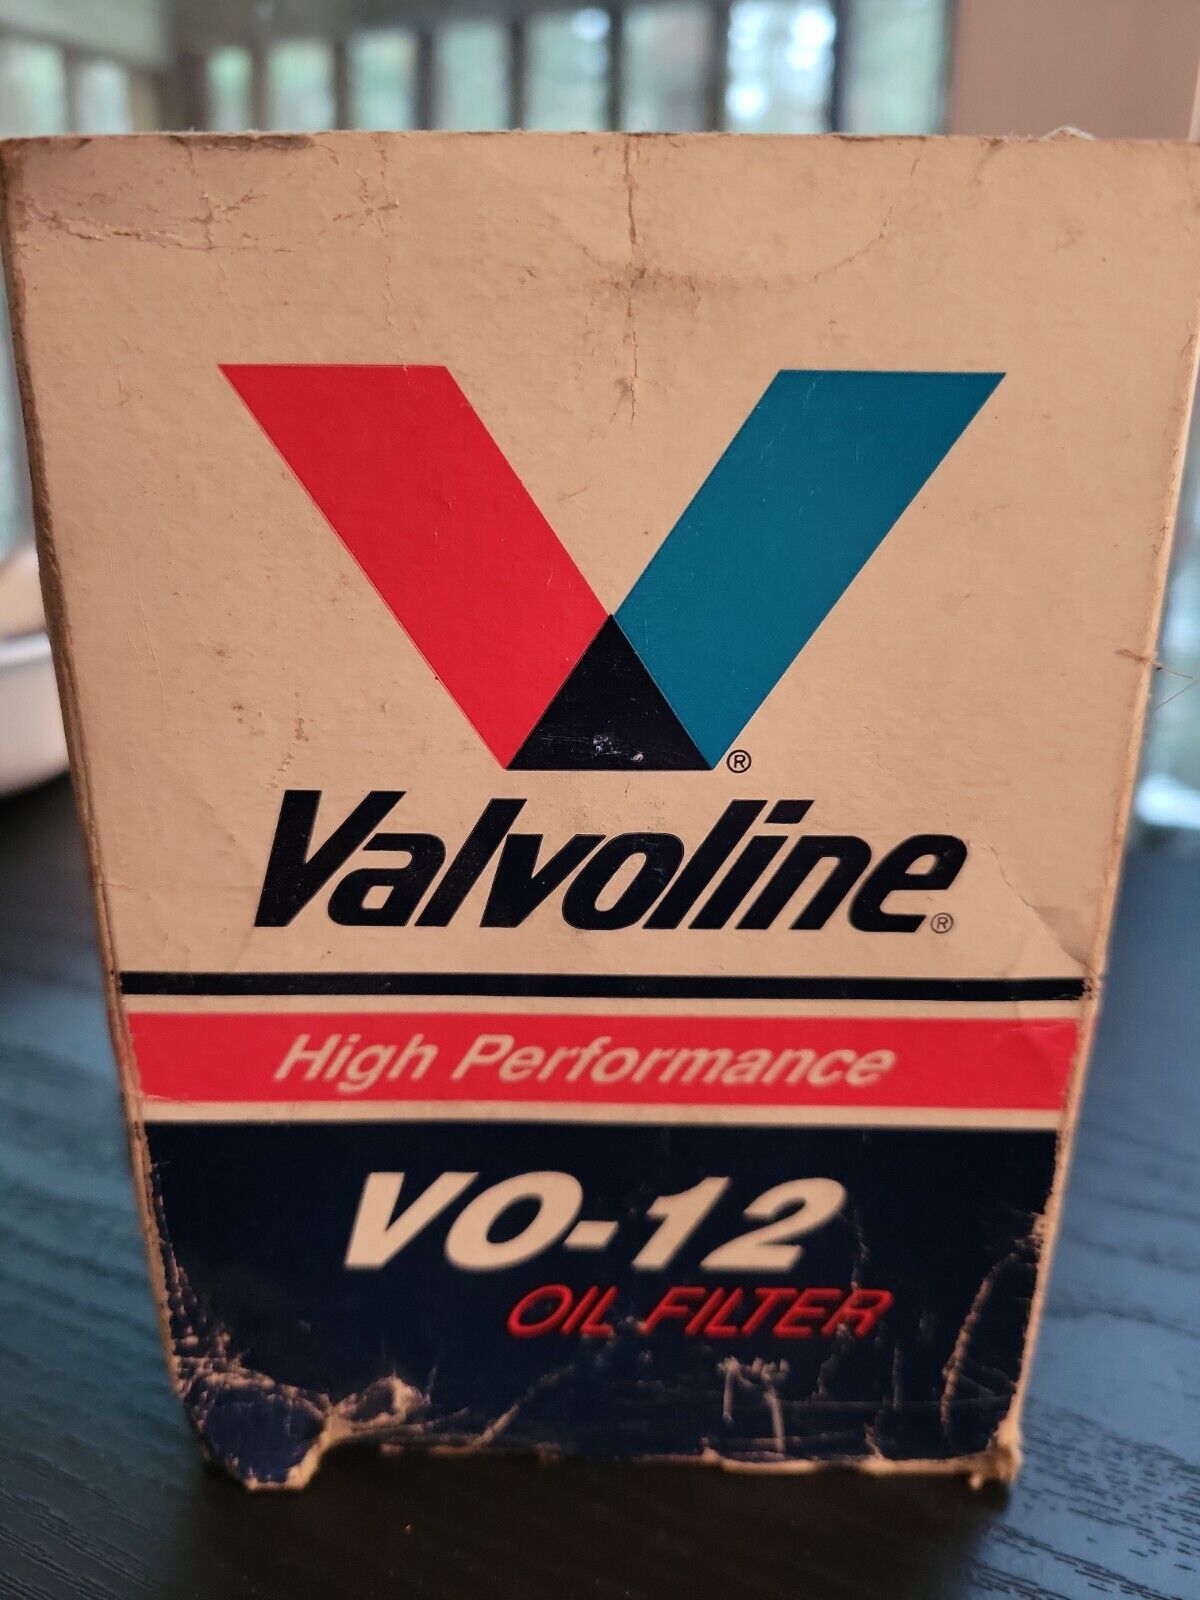 Valvoline Oil Filter VO-12